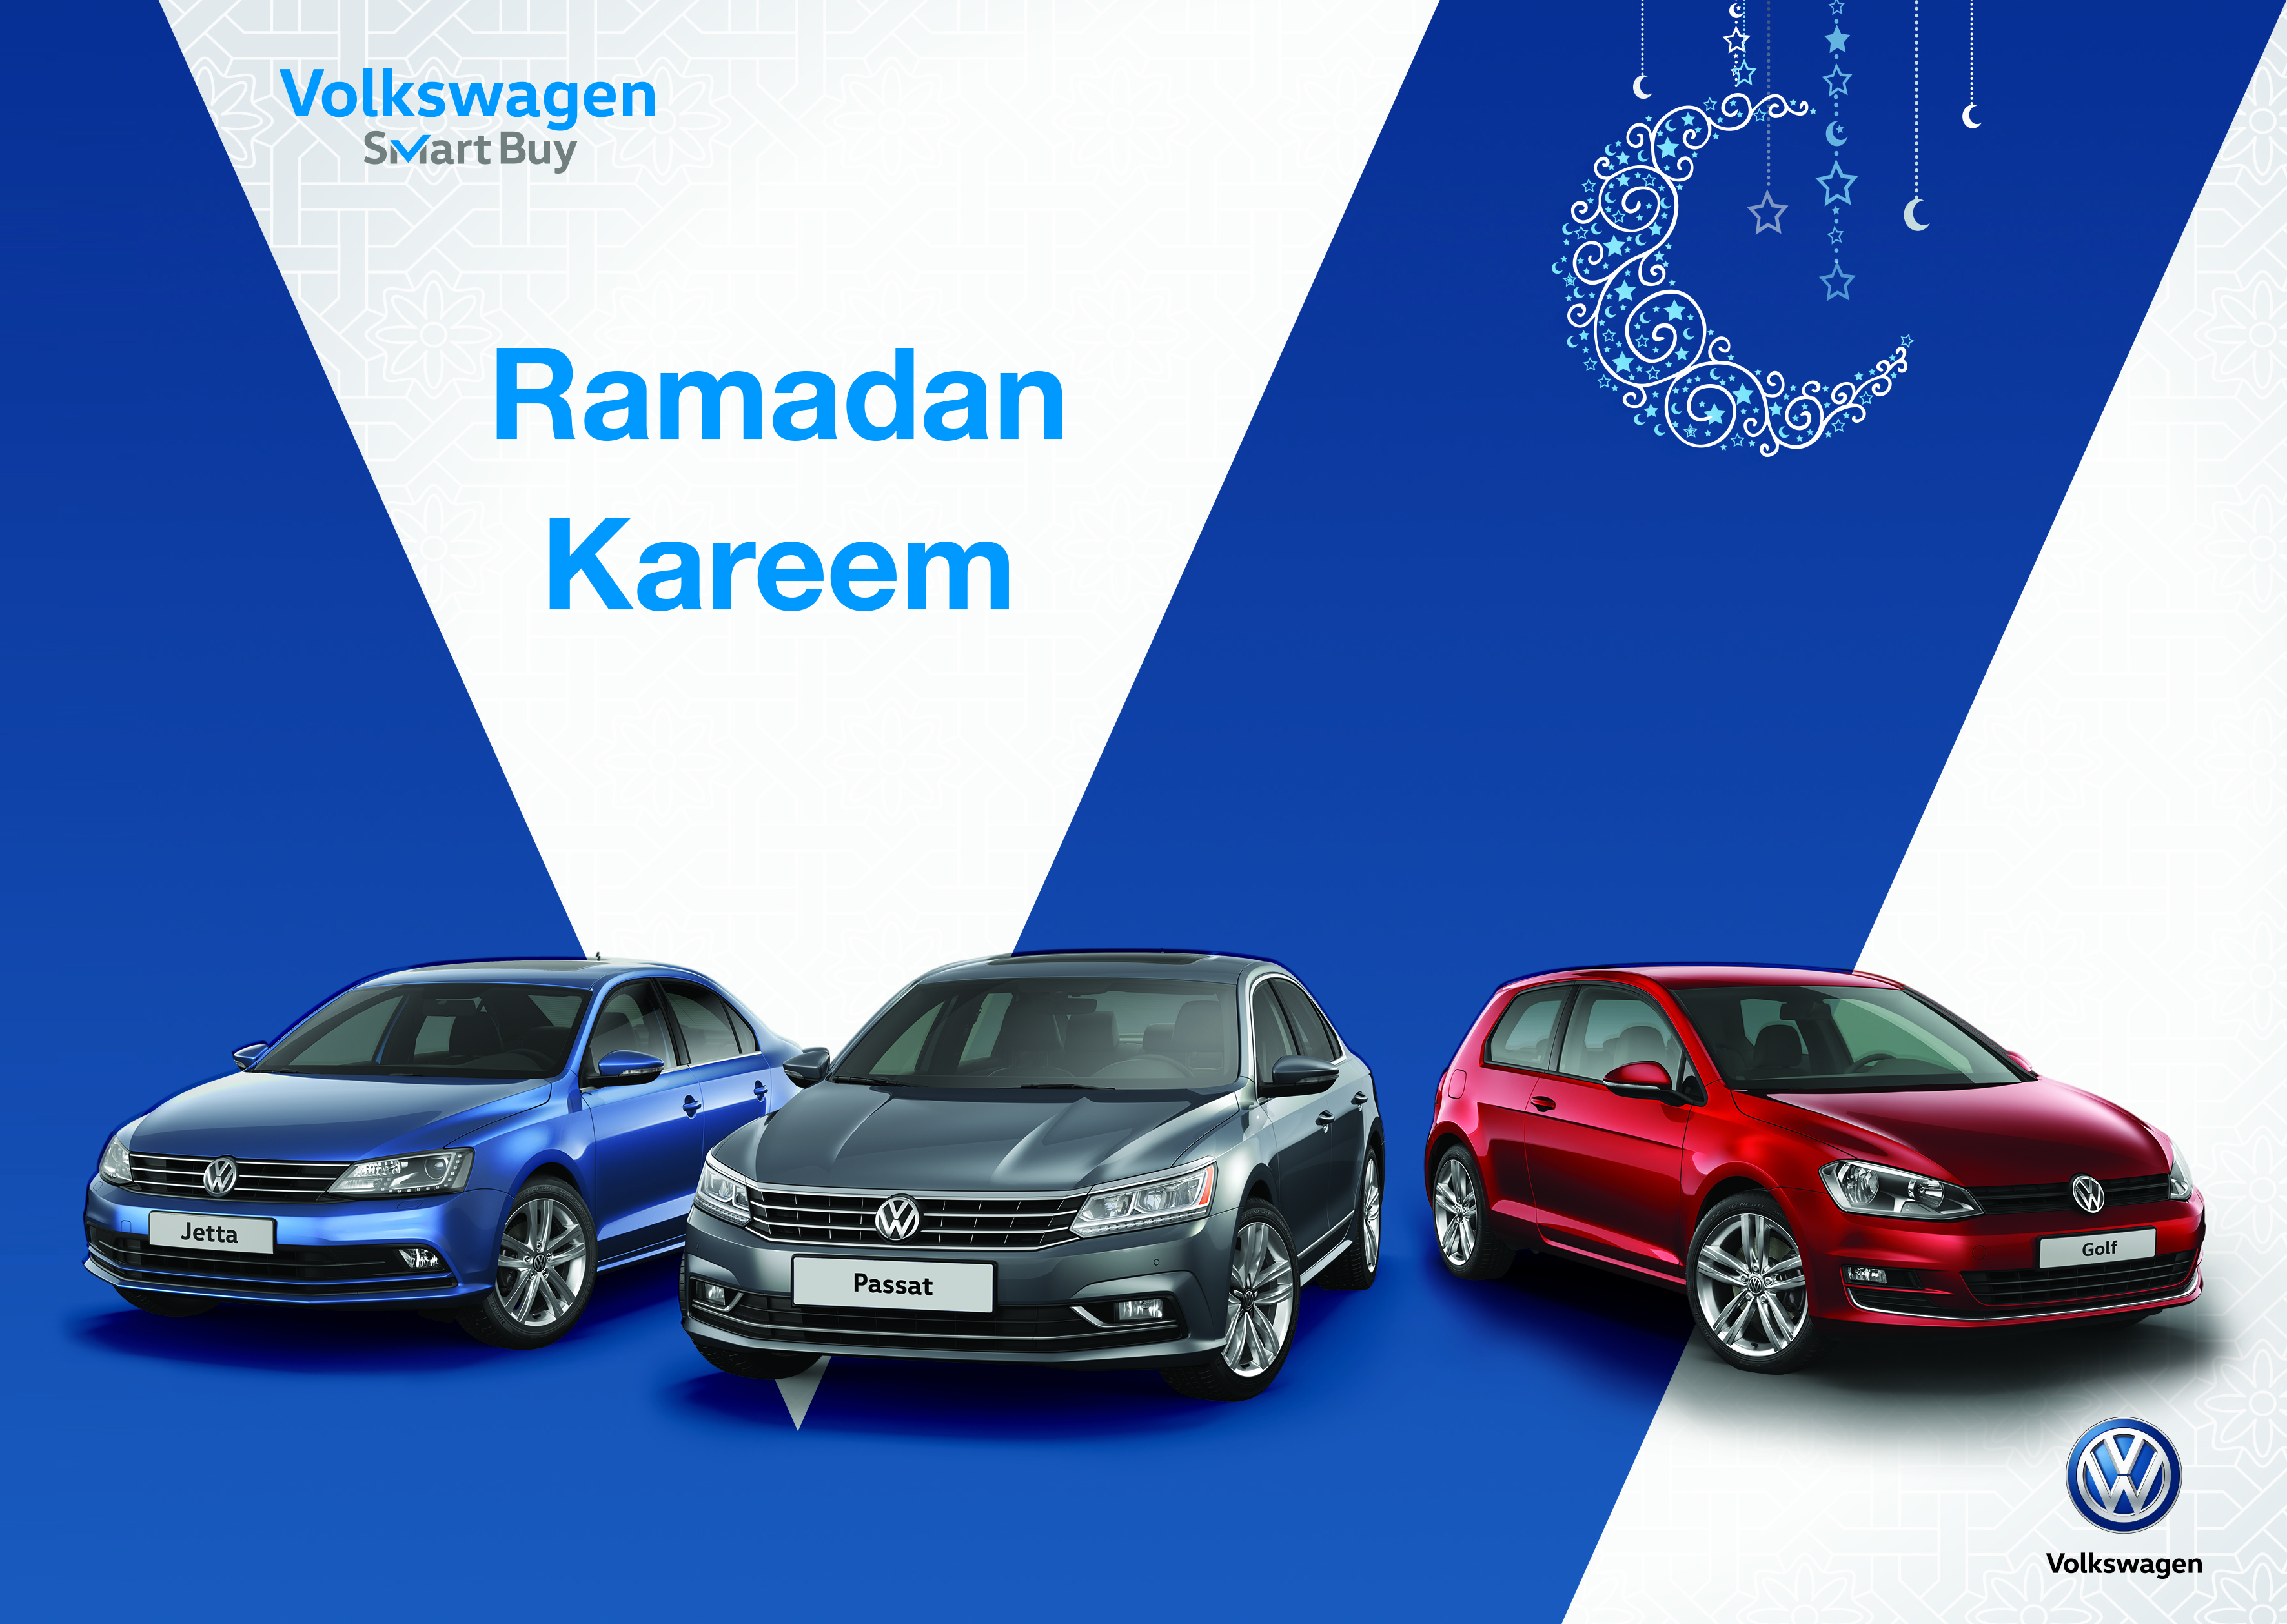 Celebrate Ramadan with the Smart Buy from Volkswagen Qatar